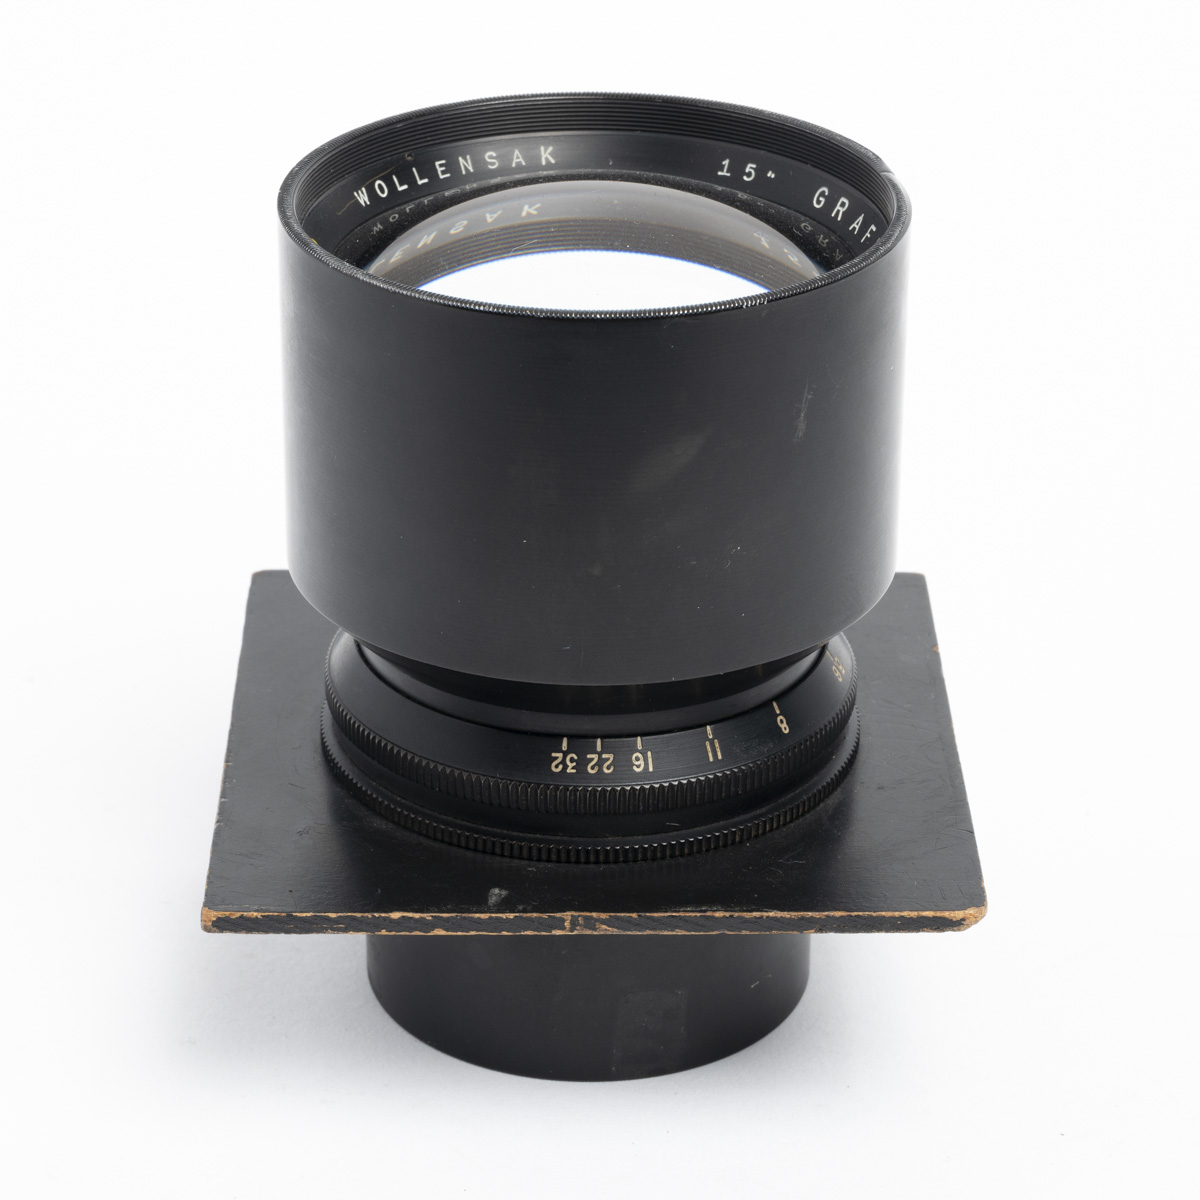 Wollensak Graflex Tele Optar 15 inch f5.6 barrel lens